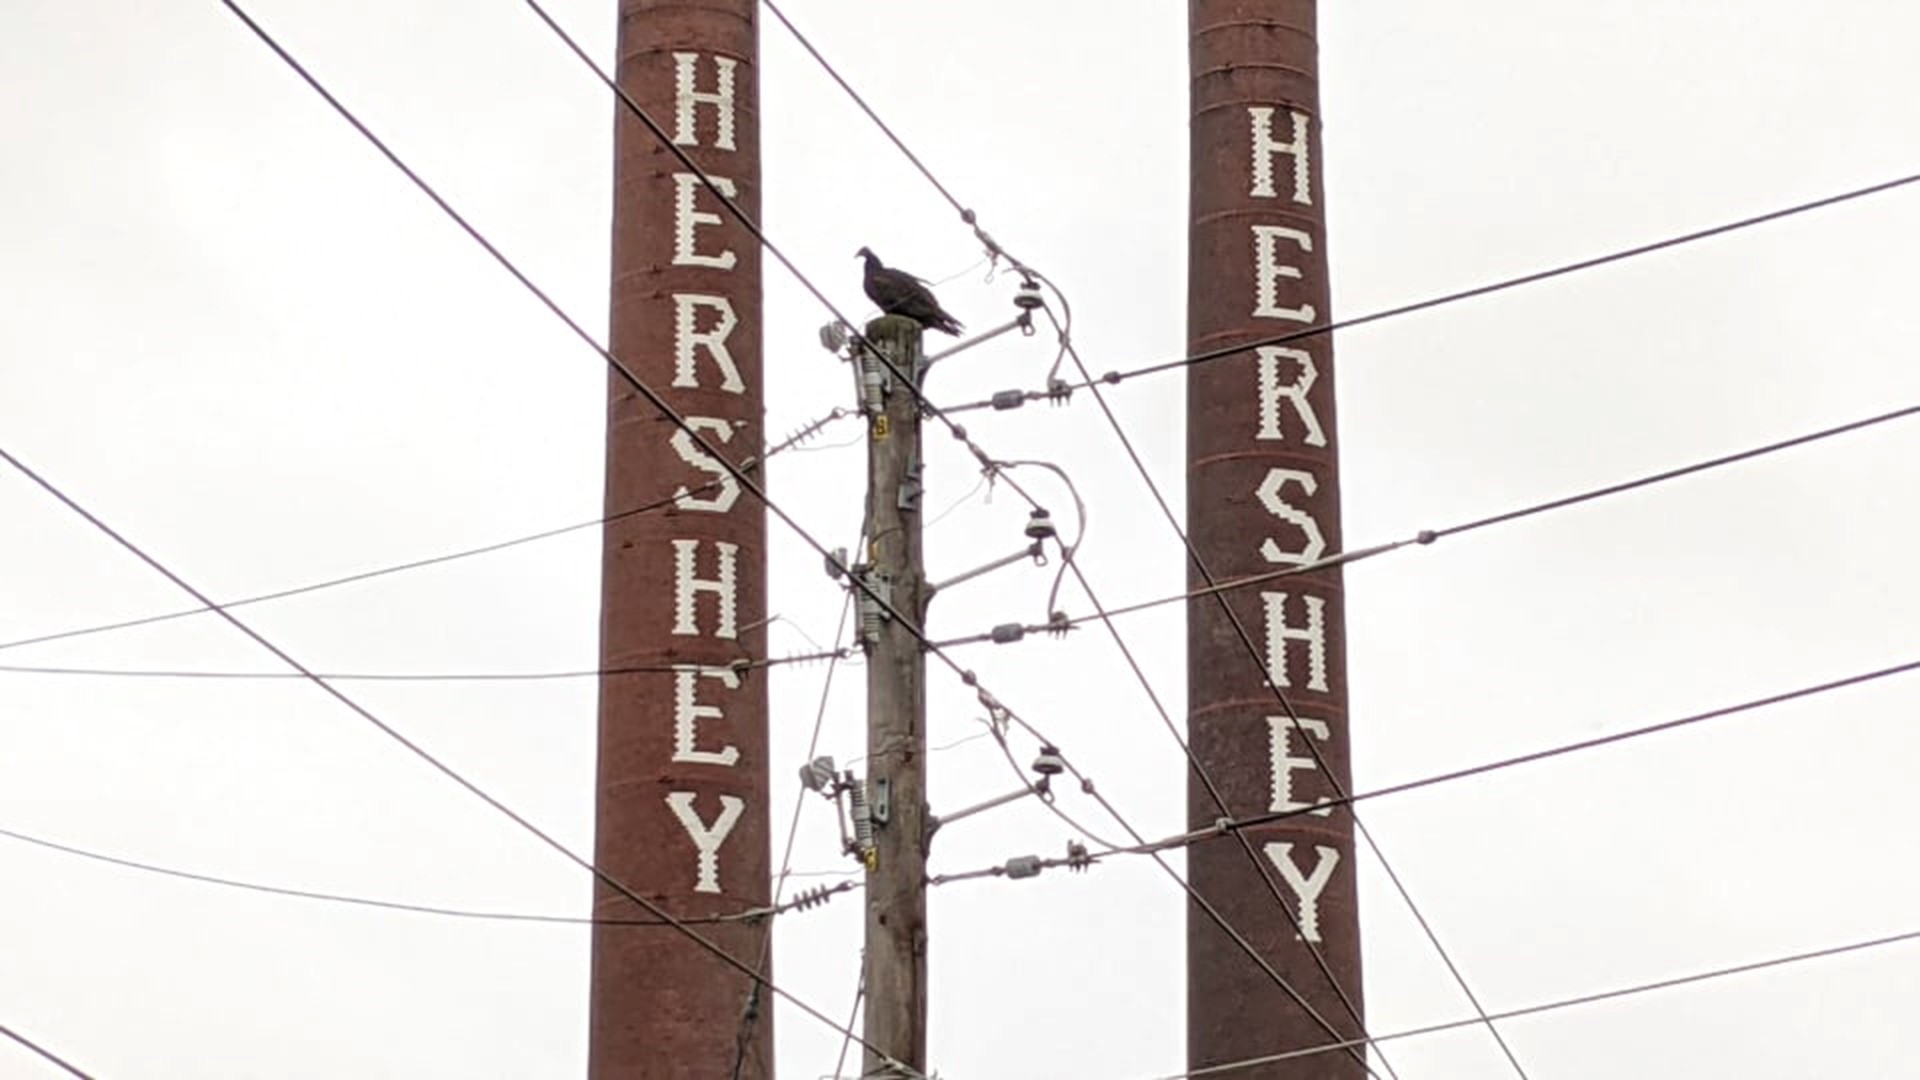 Hundreds of black vultures have descended on Hershey. Residents want them gone.